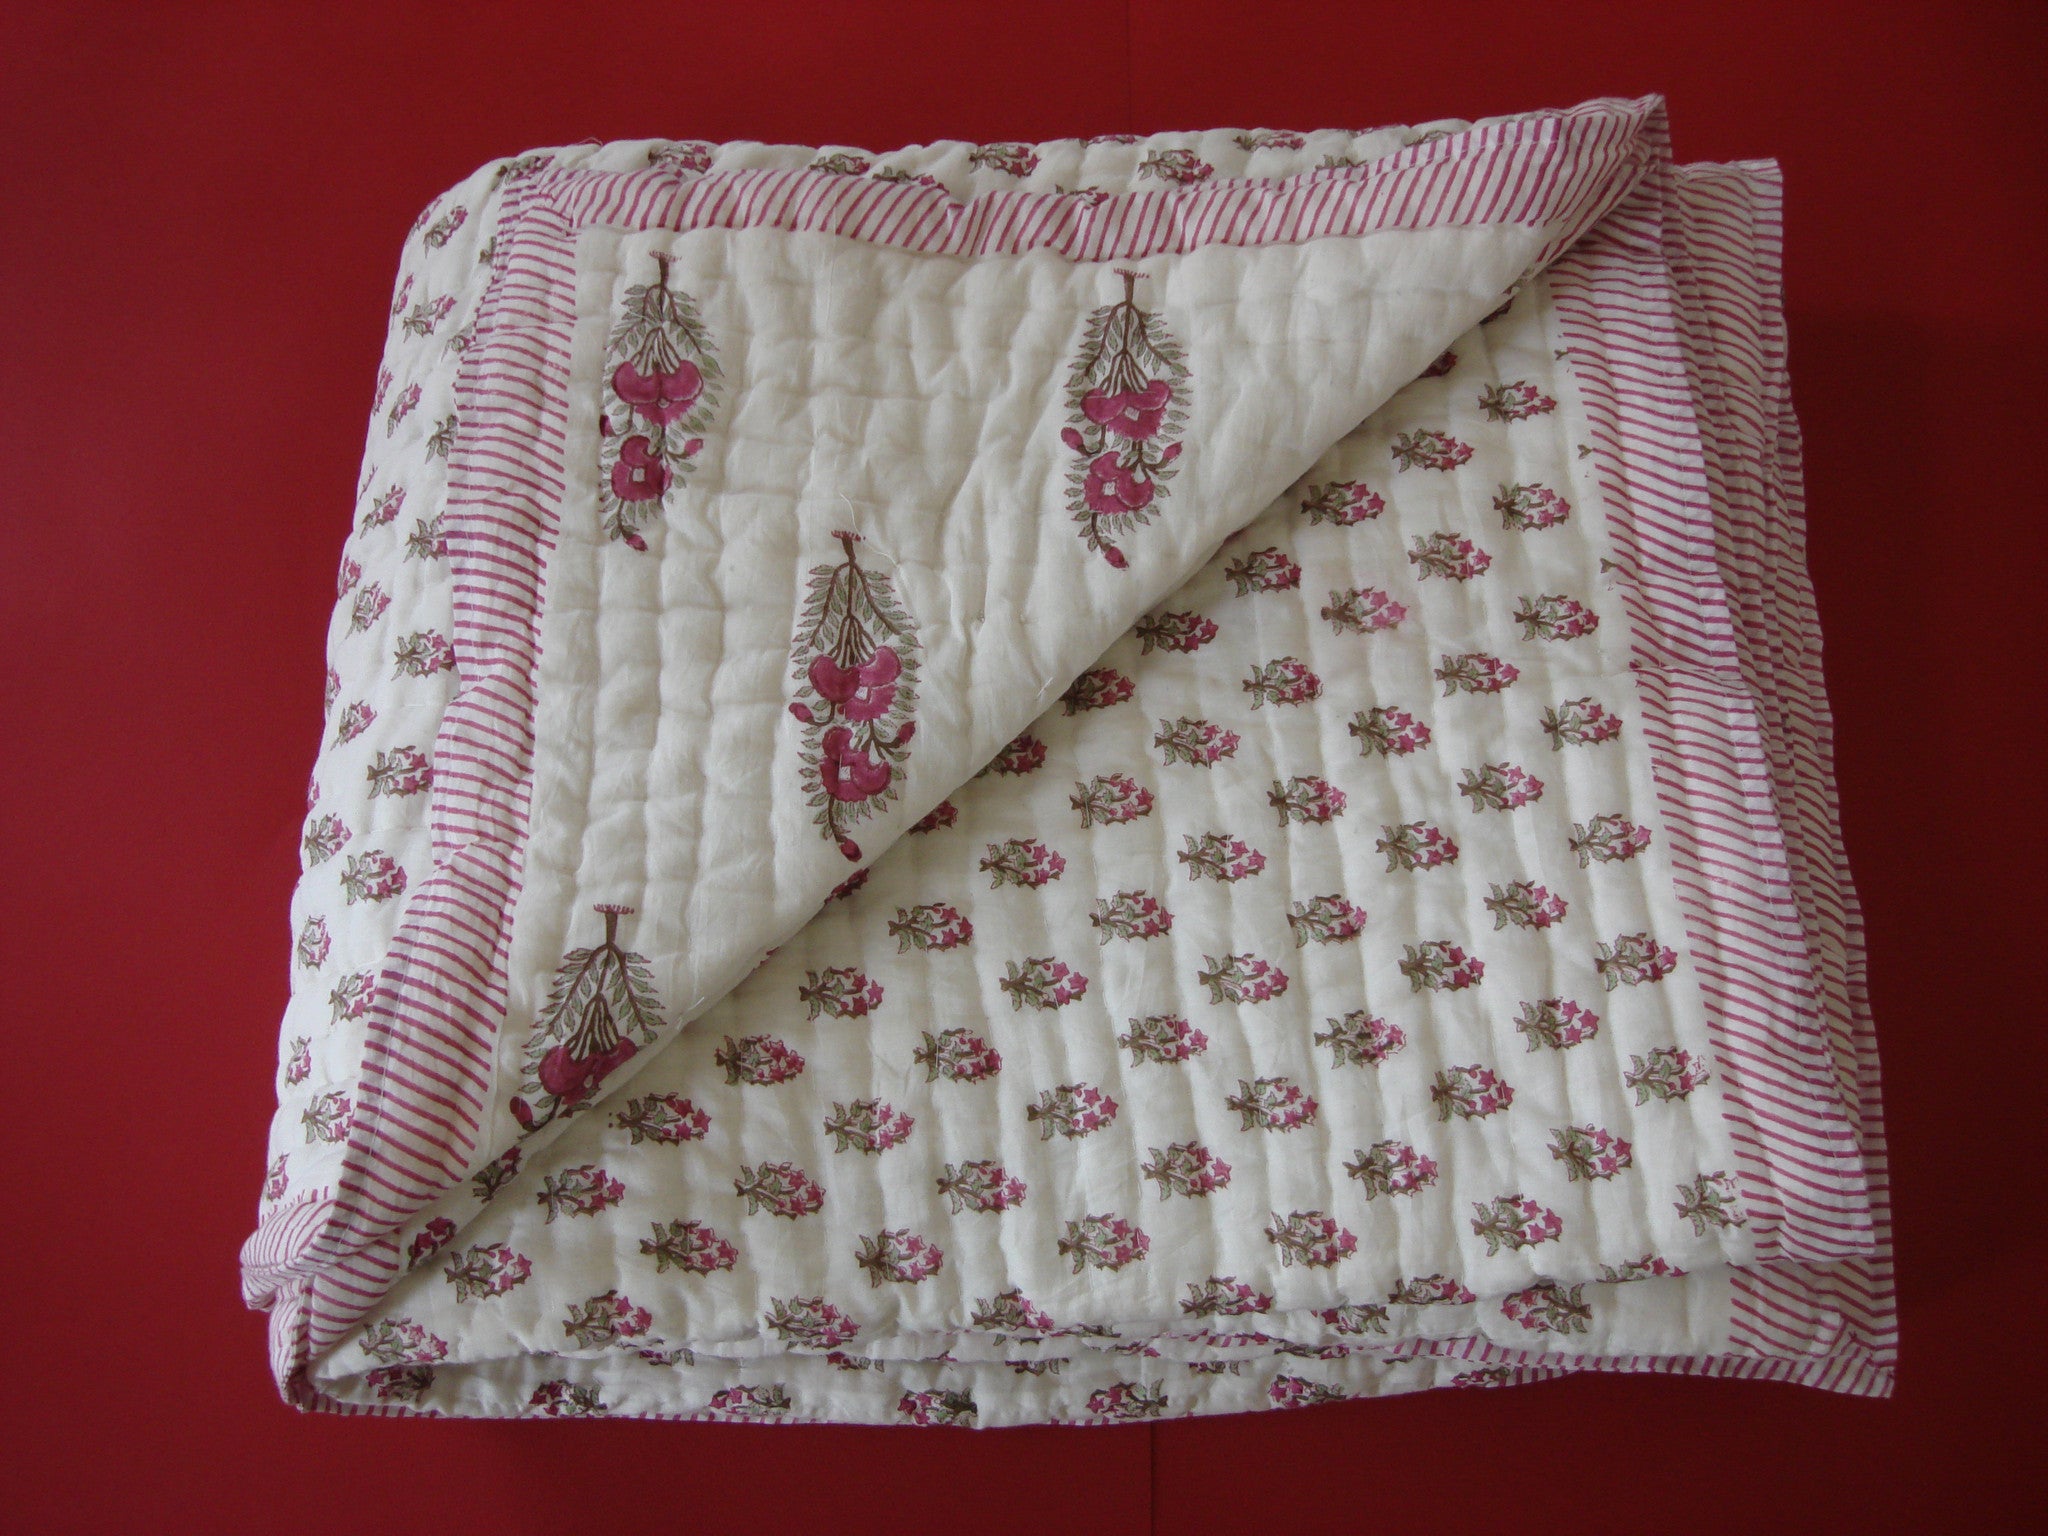 QBP 107 - Handmade, reversible, cotton, block printed quilt in bright pink floral design. - Pentagon Crafts